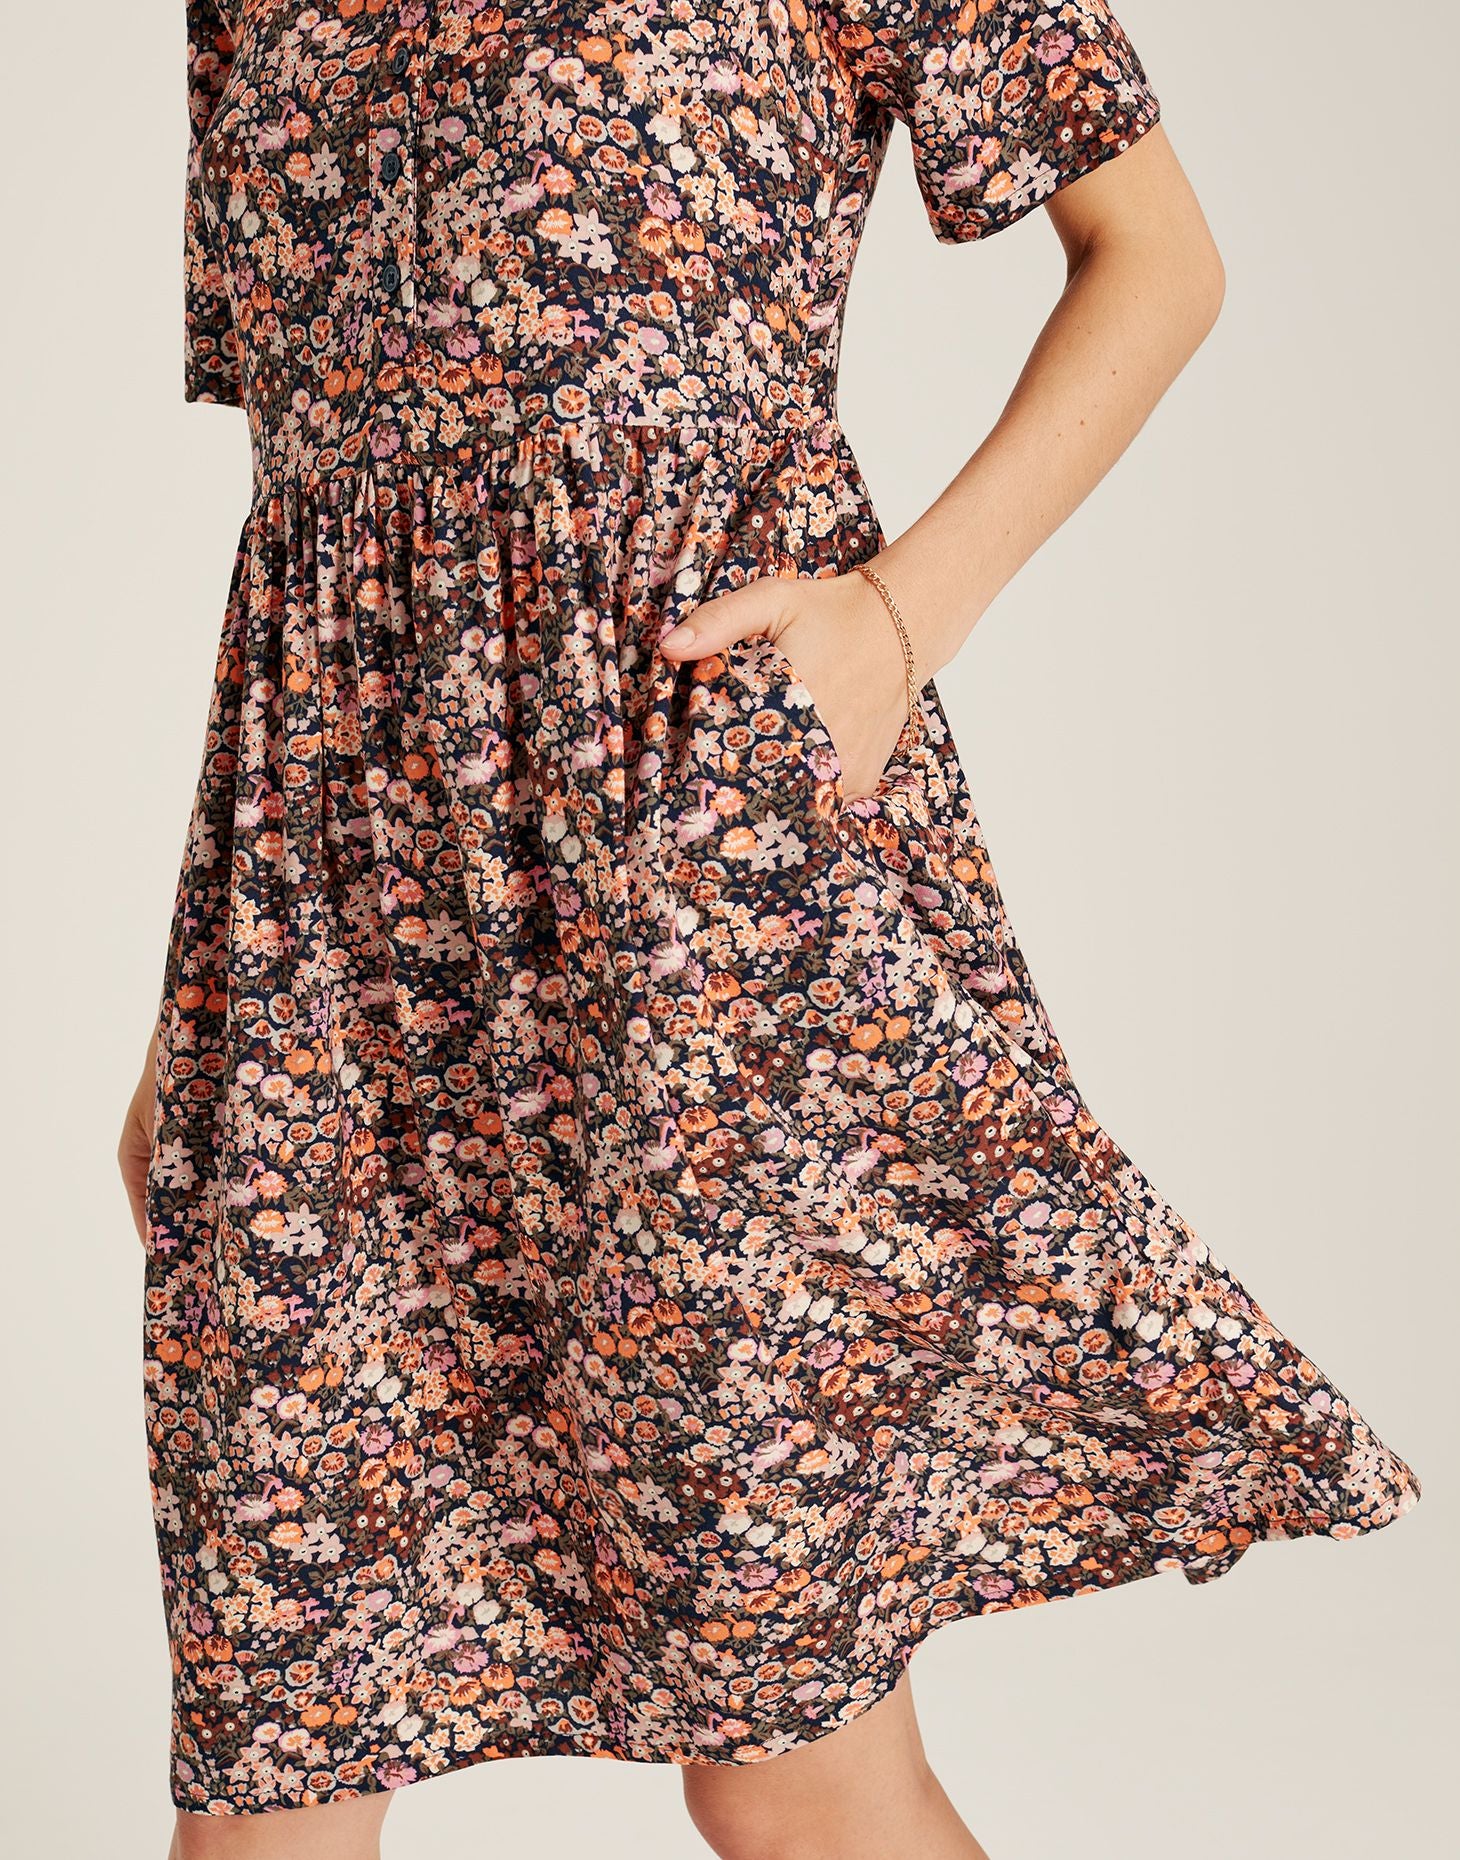 Norah Square Neck Dress - Multi Floral